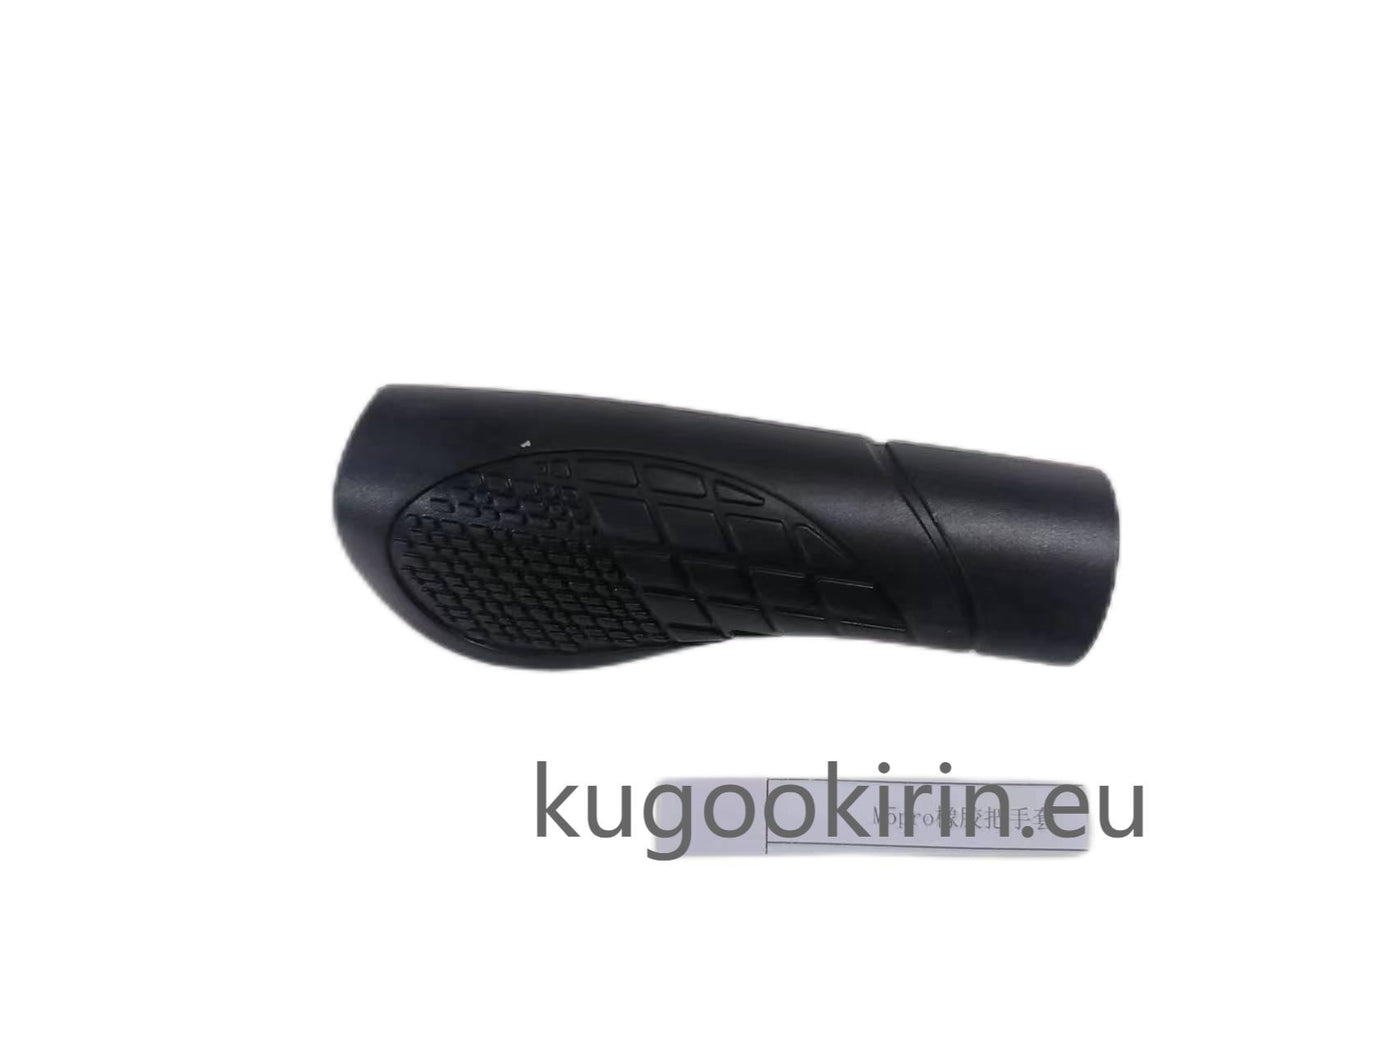 Manicotto della maniglia per Kugoo Kirin KuKirin M5 Pro